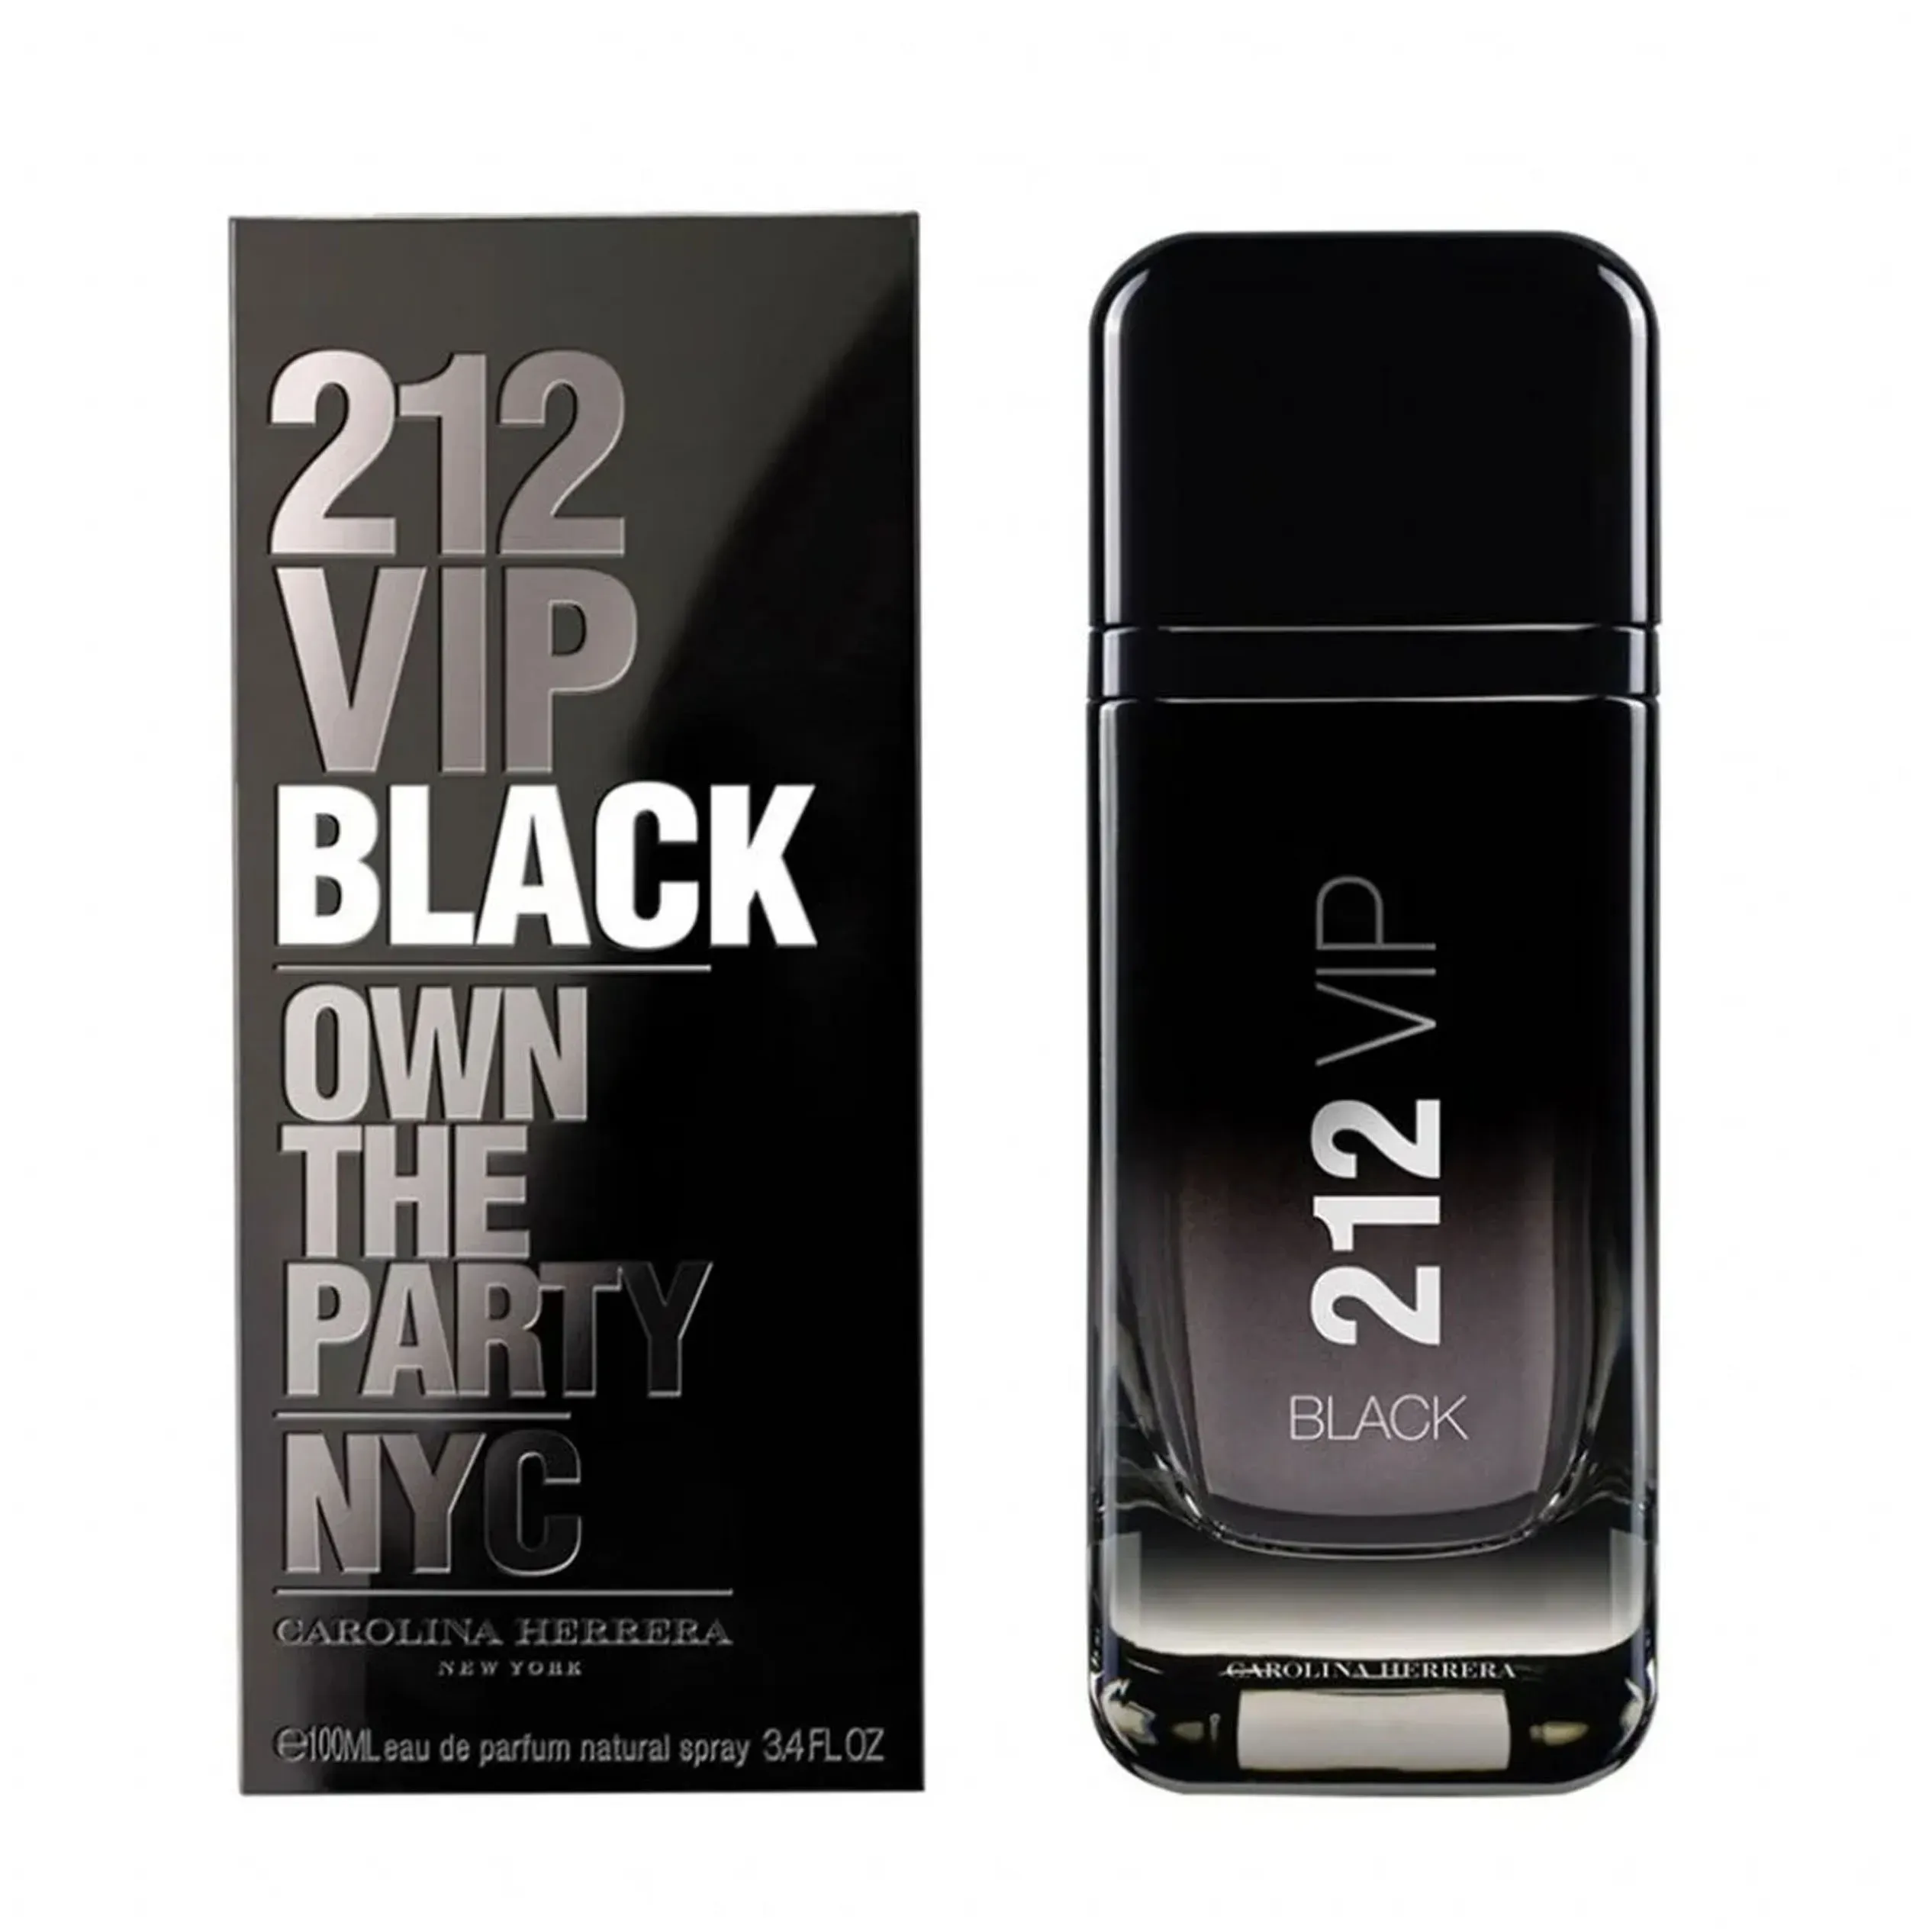 Perfume 212 VIP Black Carolina Herrera (Replica Importada)- Hombre